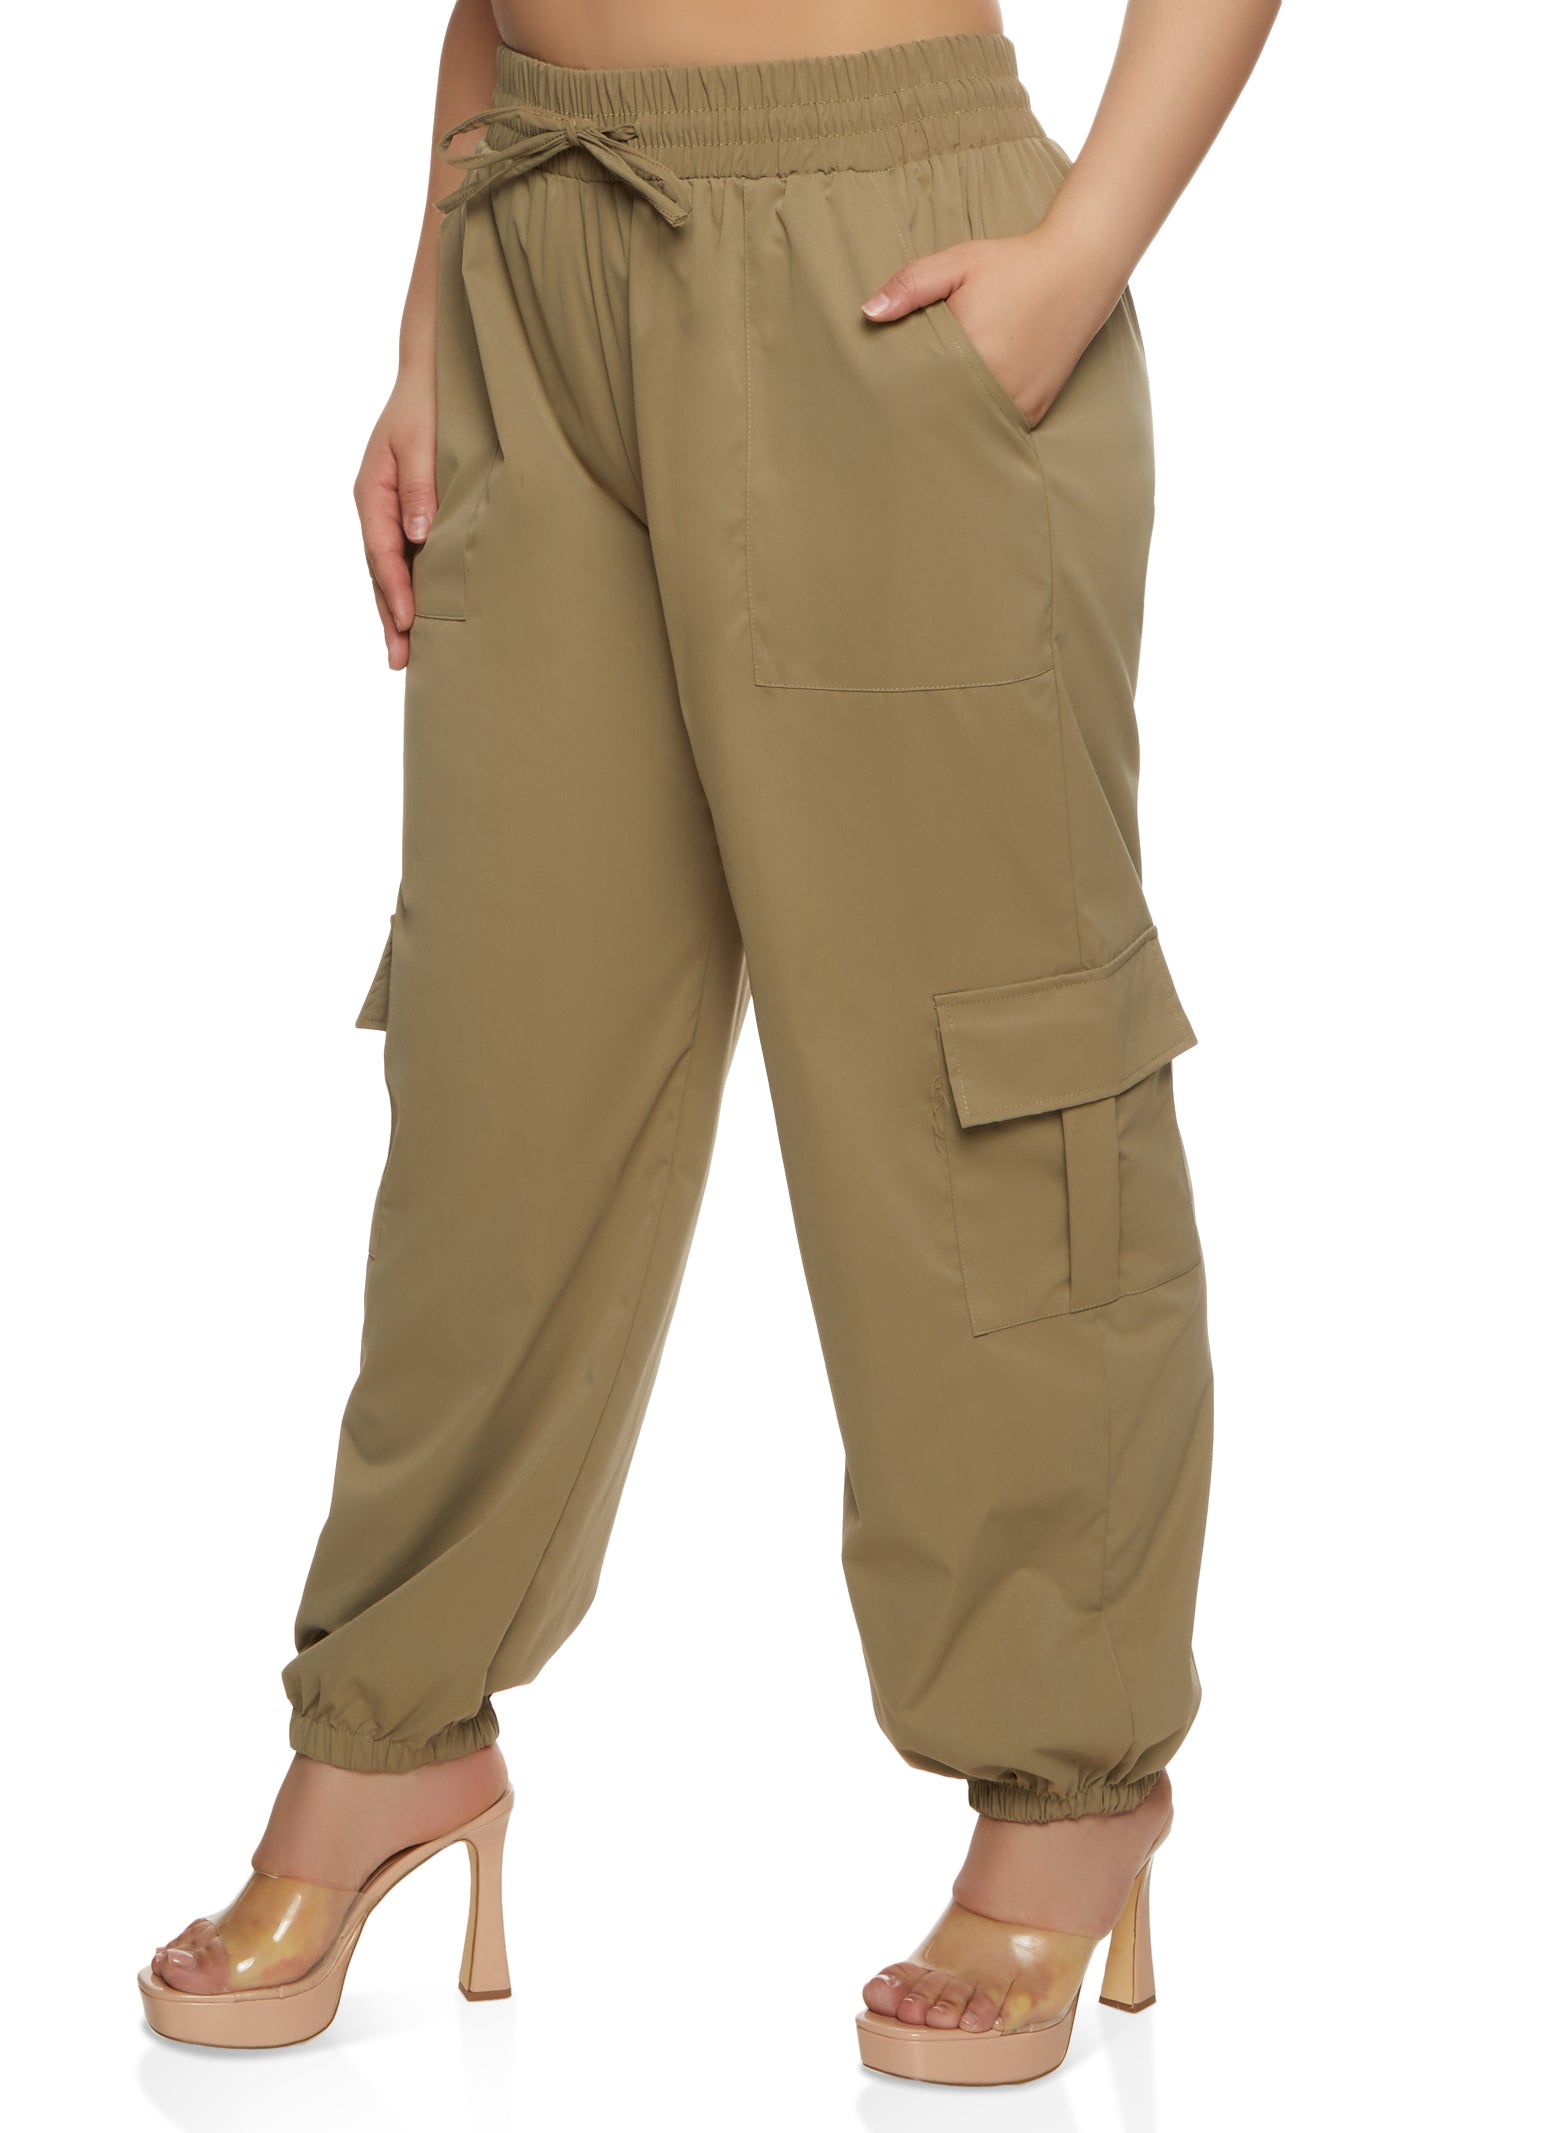 Women's Bottom Sweatpants No Drawstring Joggers Pants Workout High Waisted  Womens Plus Size Work Pants (Brown, XL)